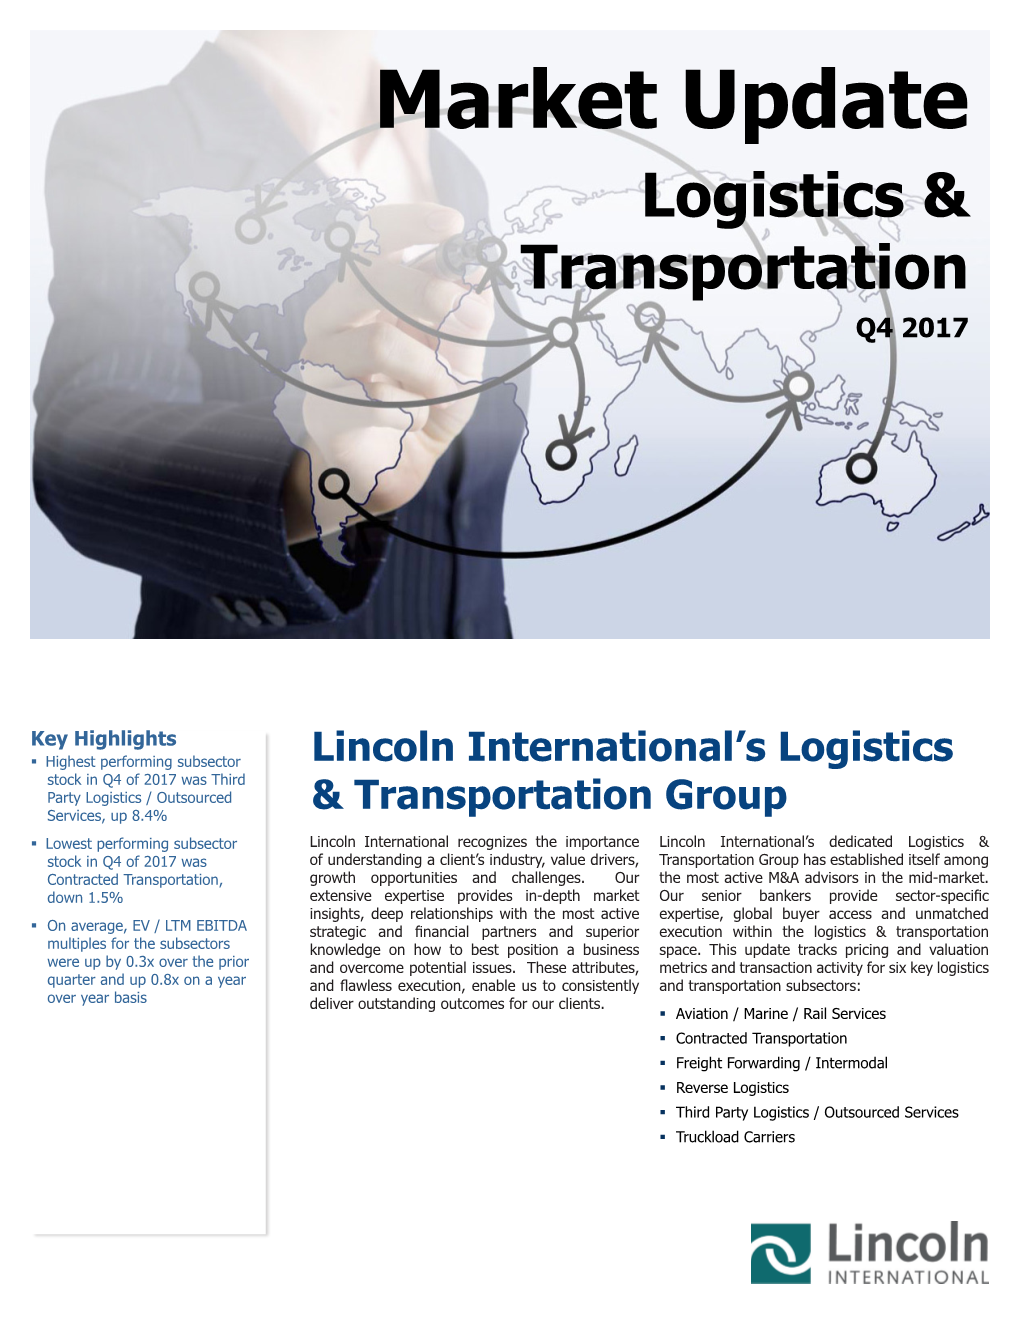 Market Update Logistics & Transportation Q4 2017